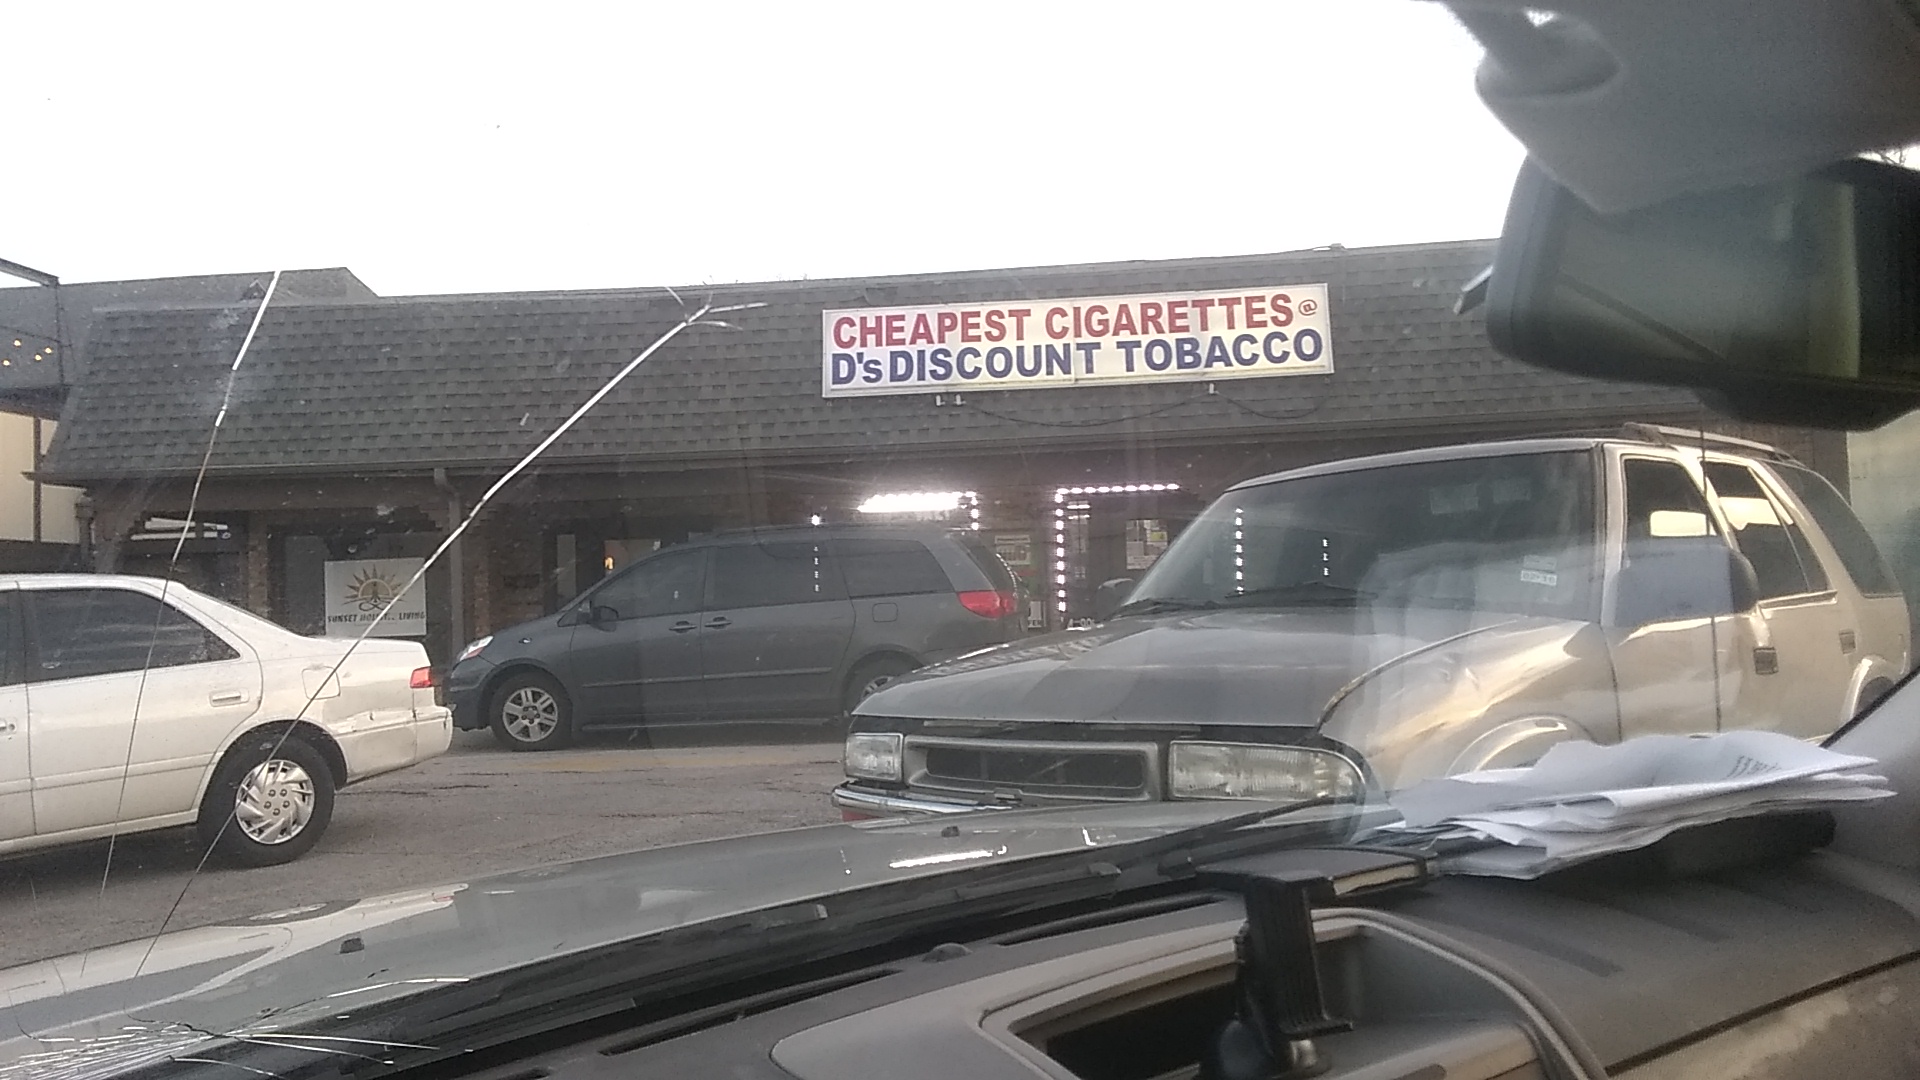 D's Discount Tobacco